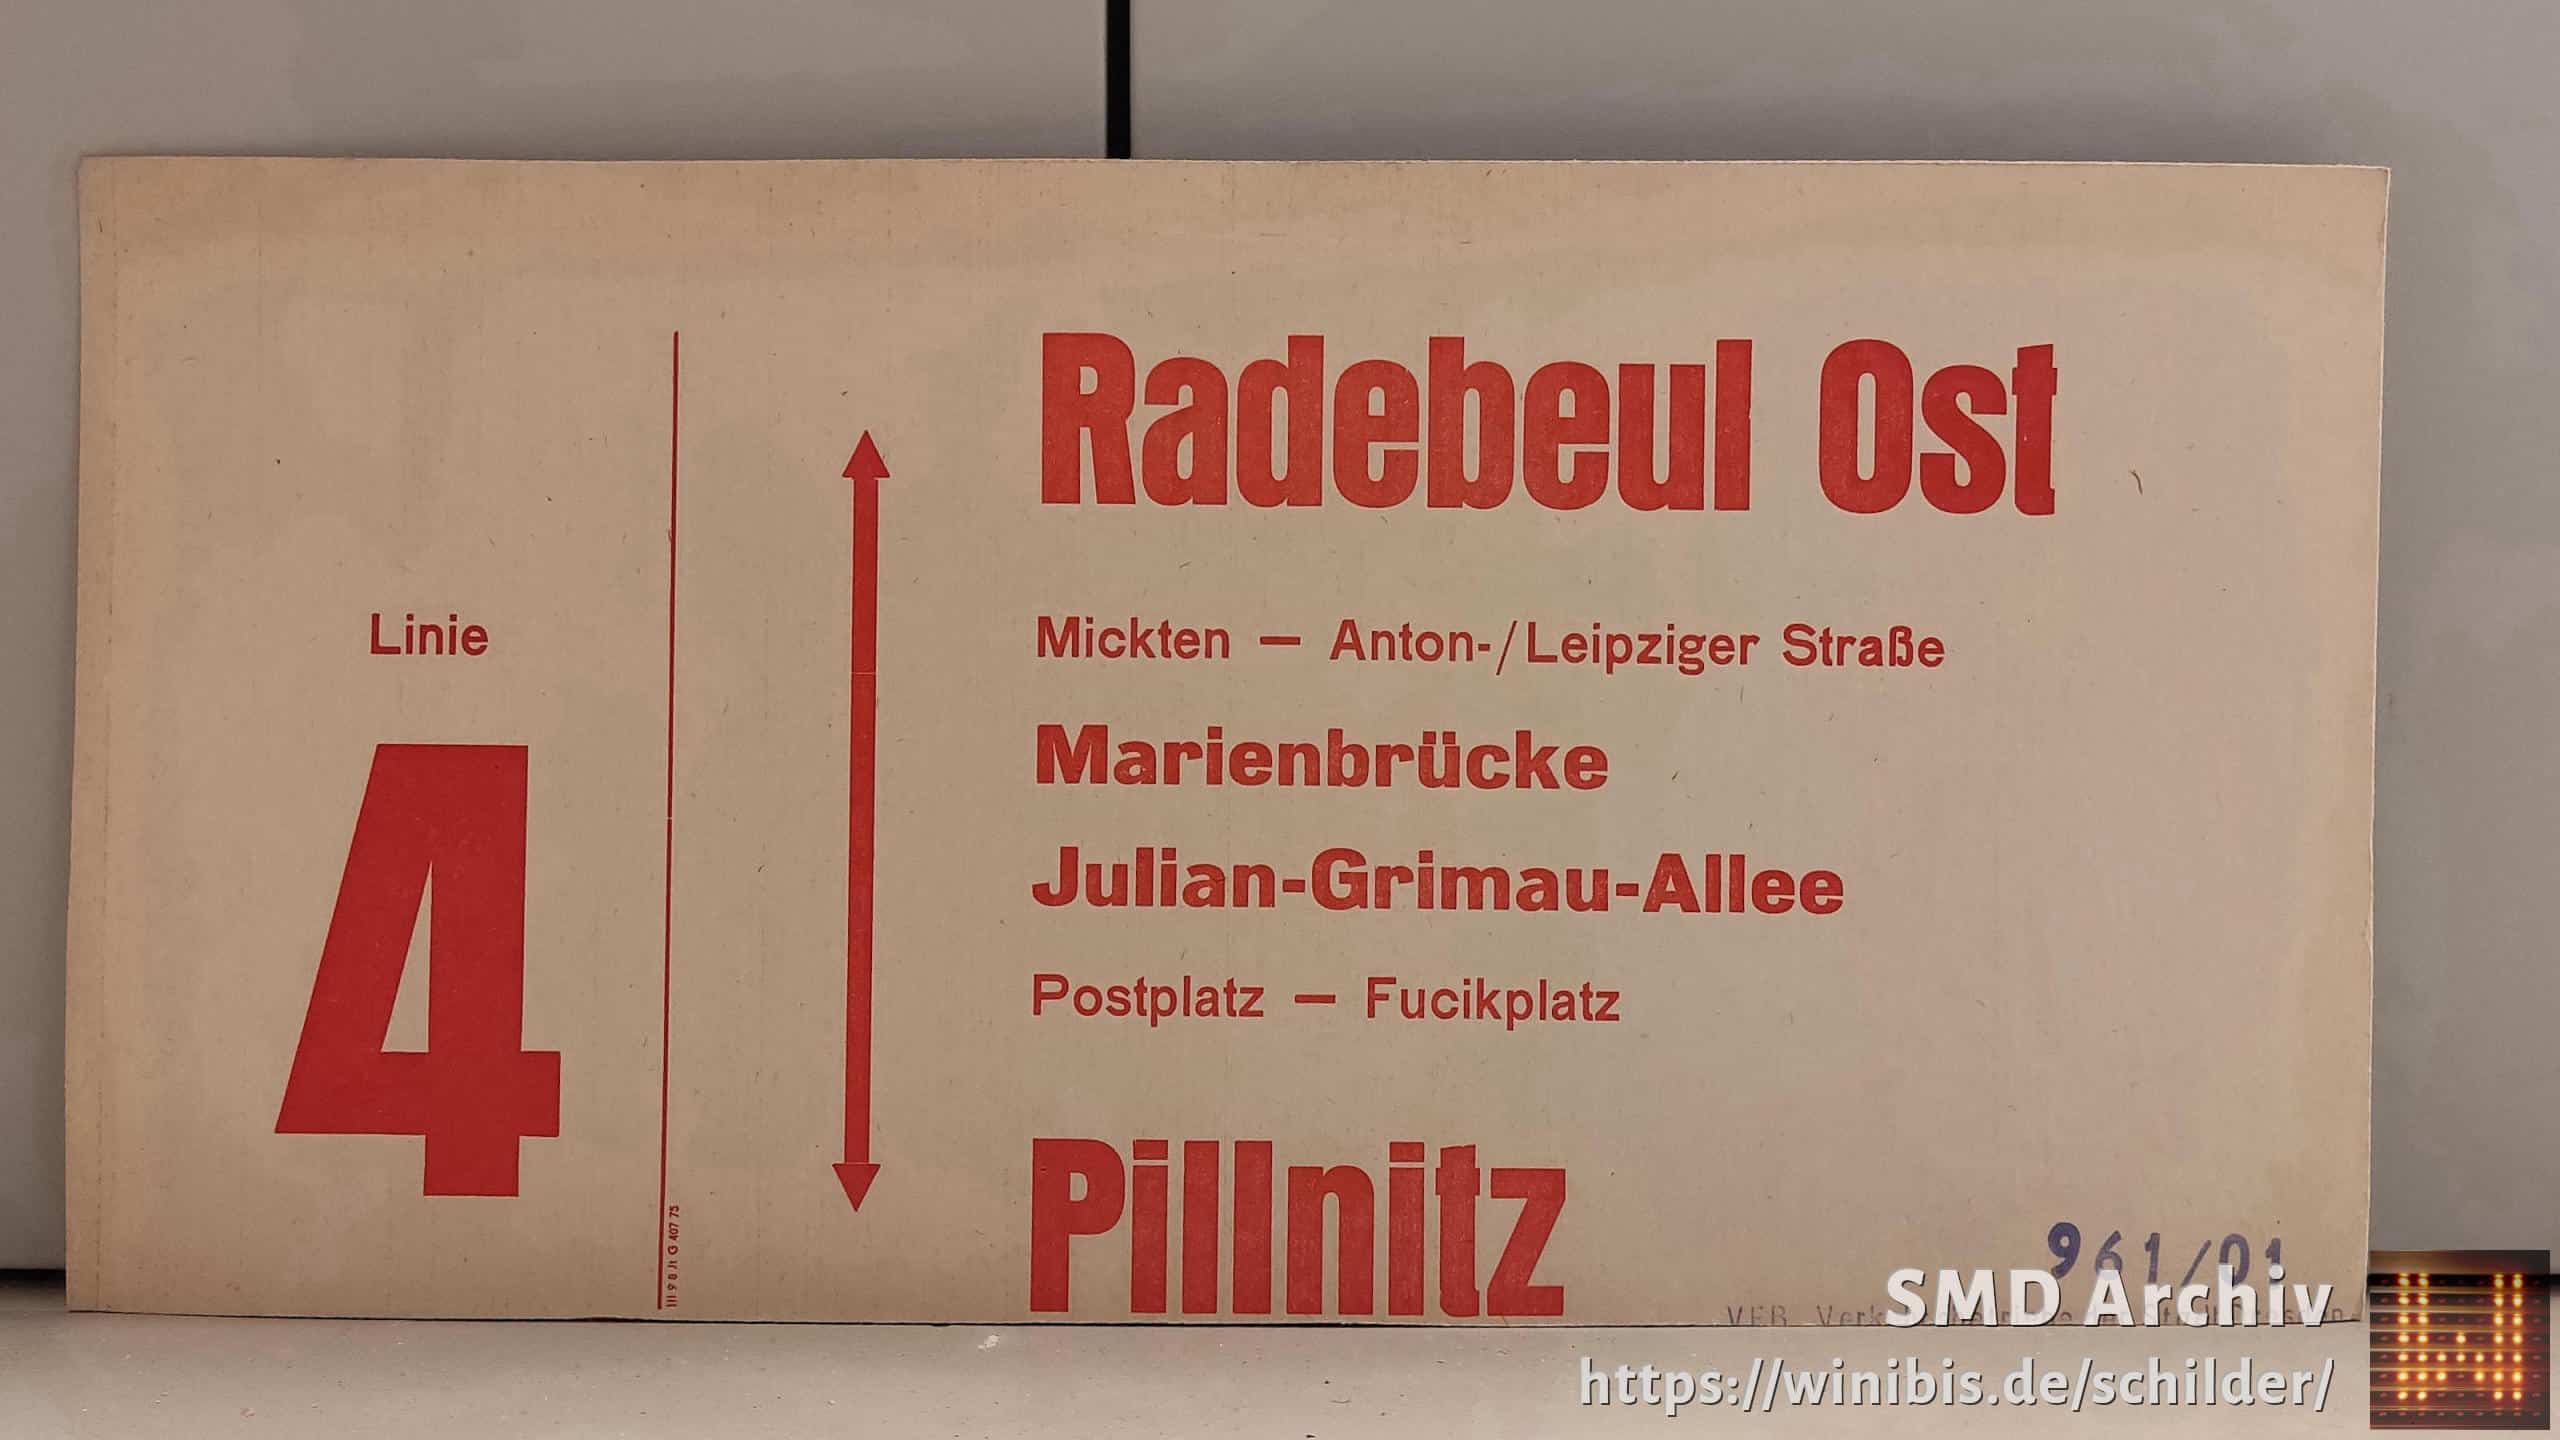 Linie 4 Radebeul Ost – Pillnitz